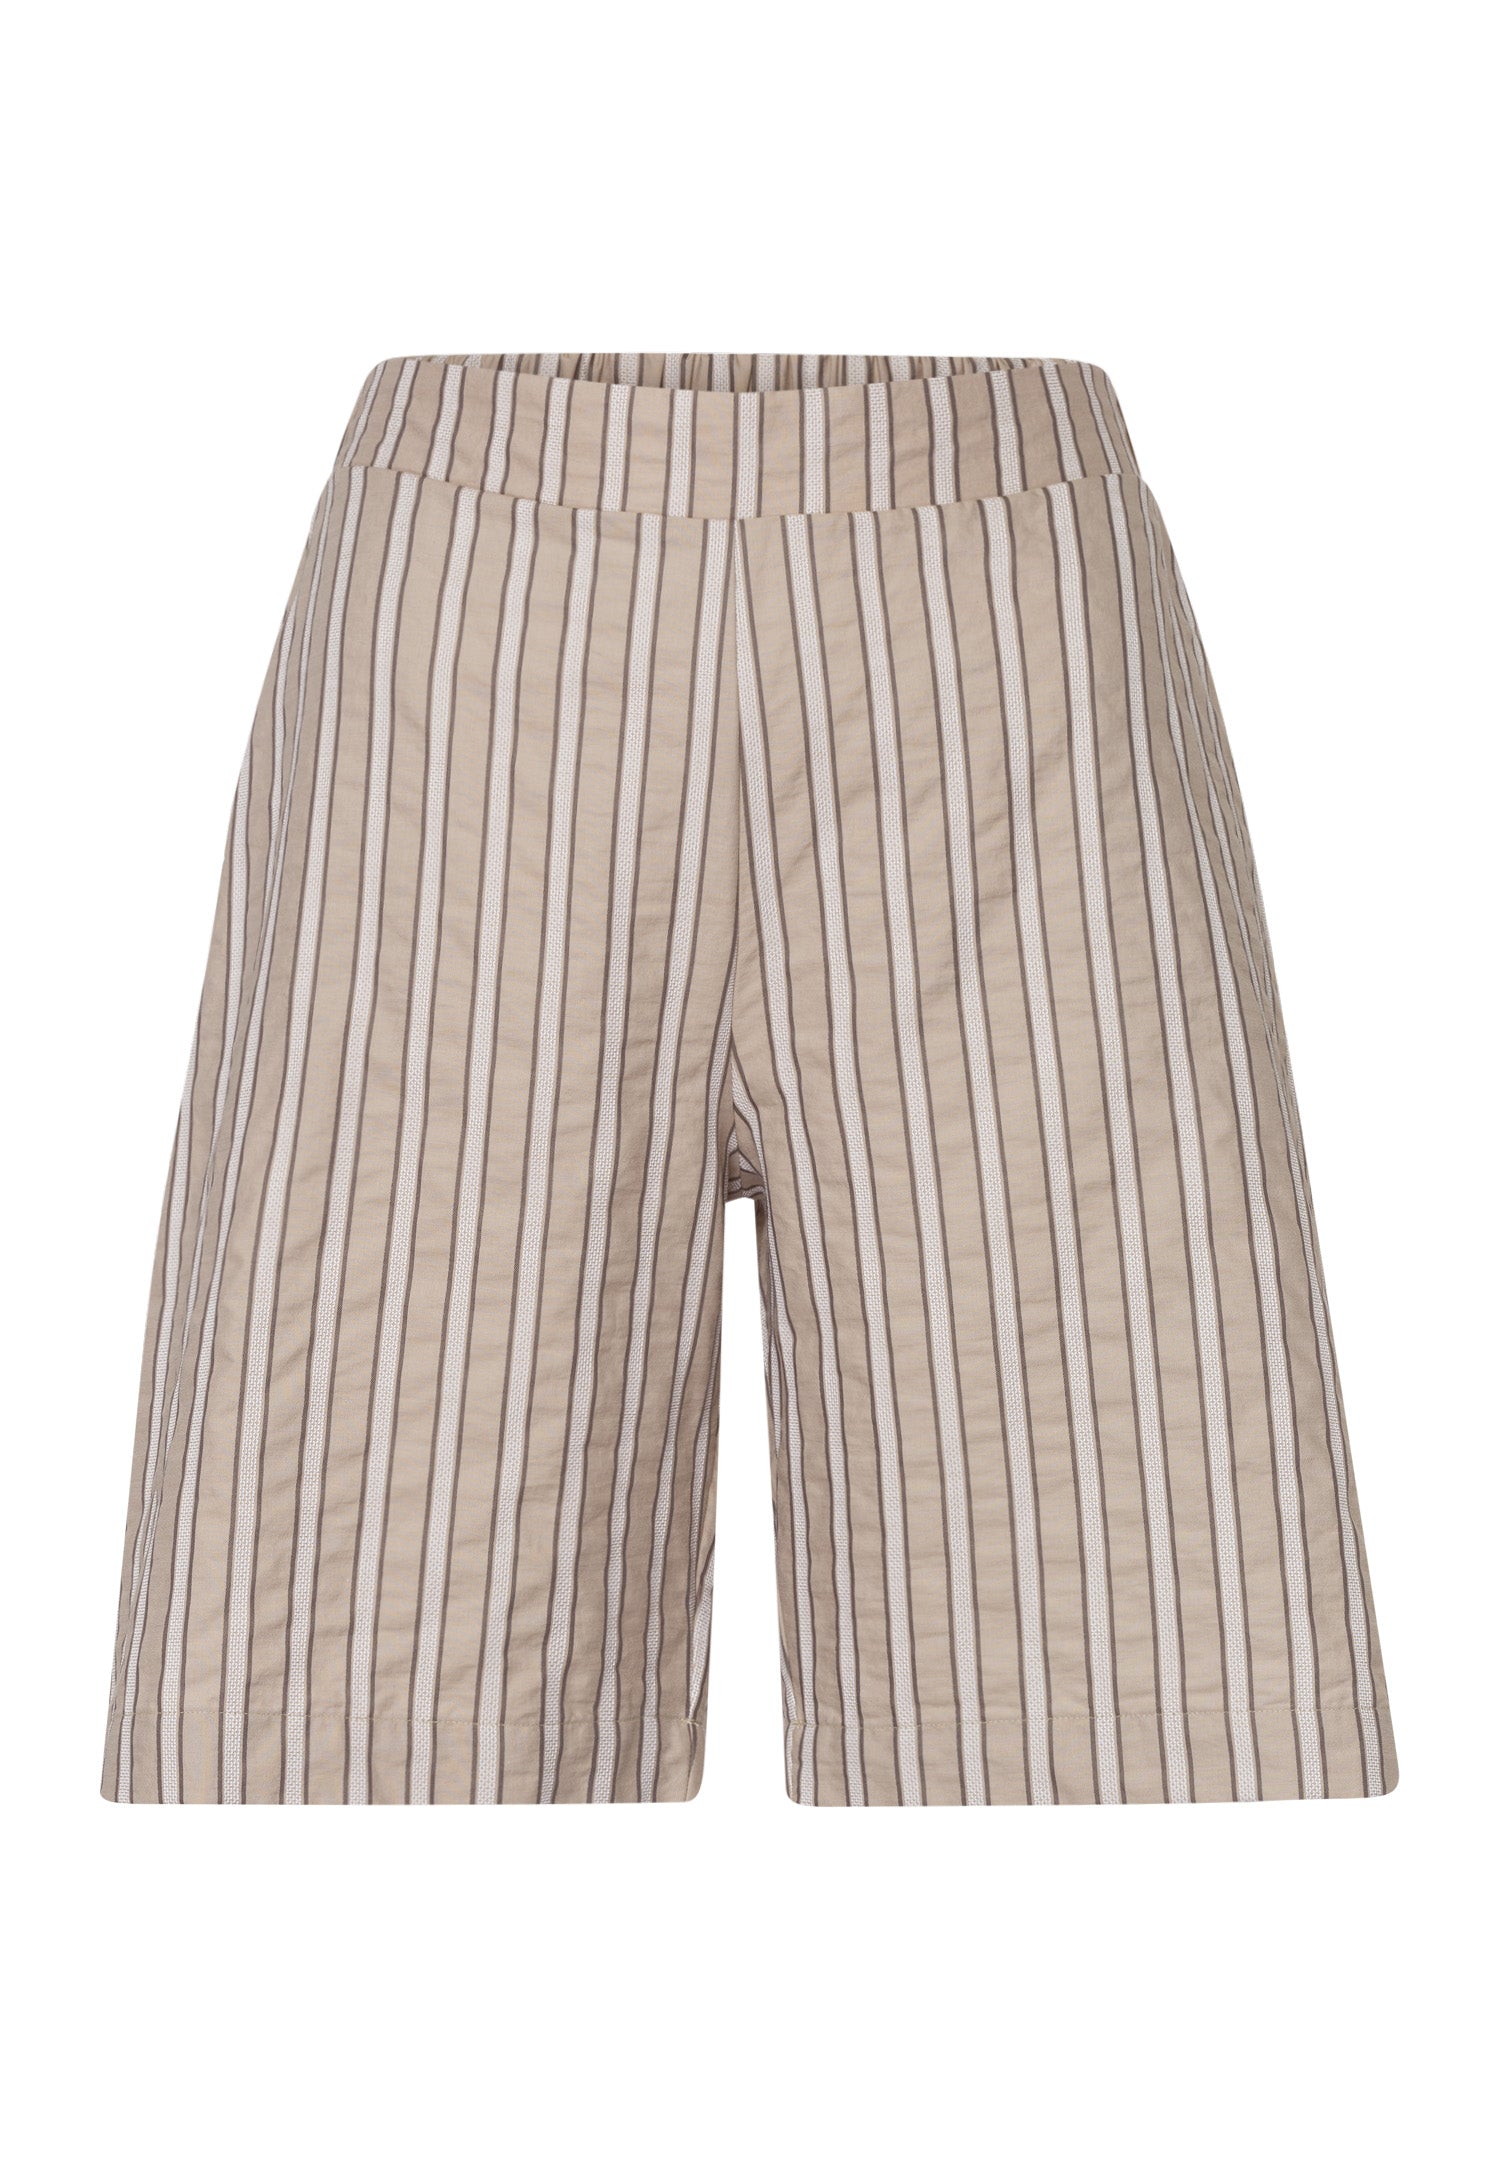 78710 Urban Casuals Shorts - 2370 Earthy Stripe